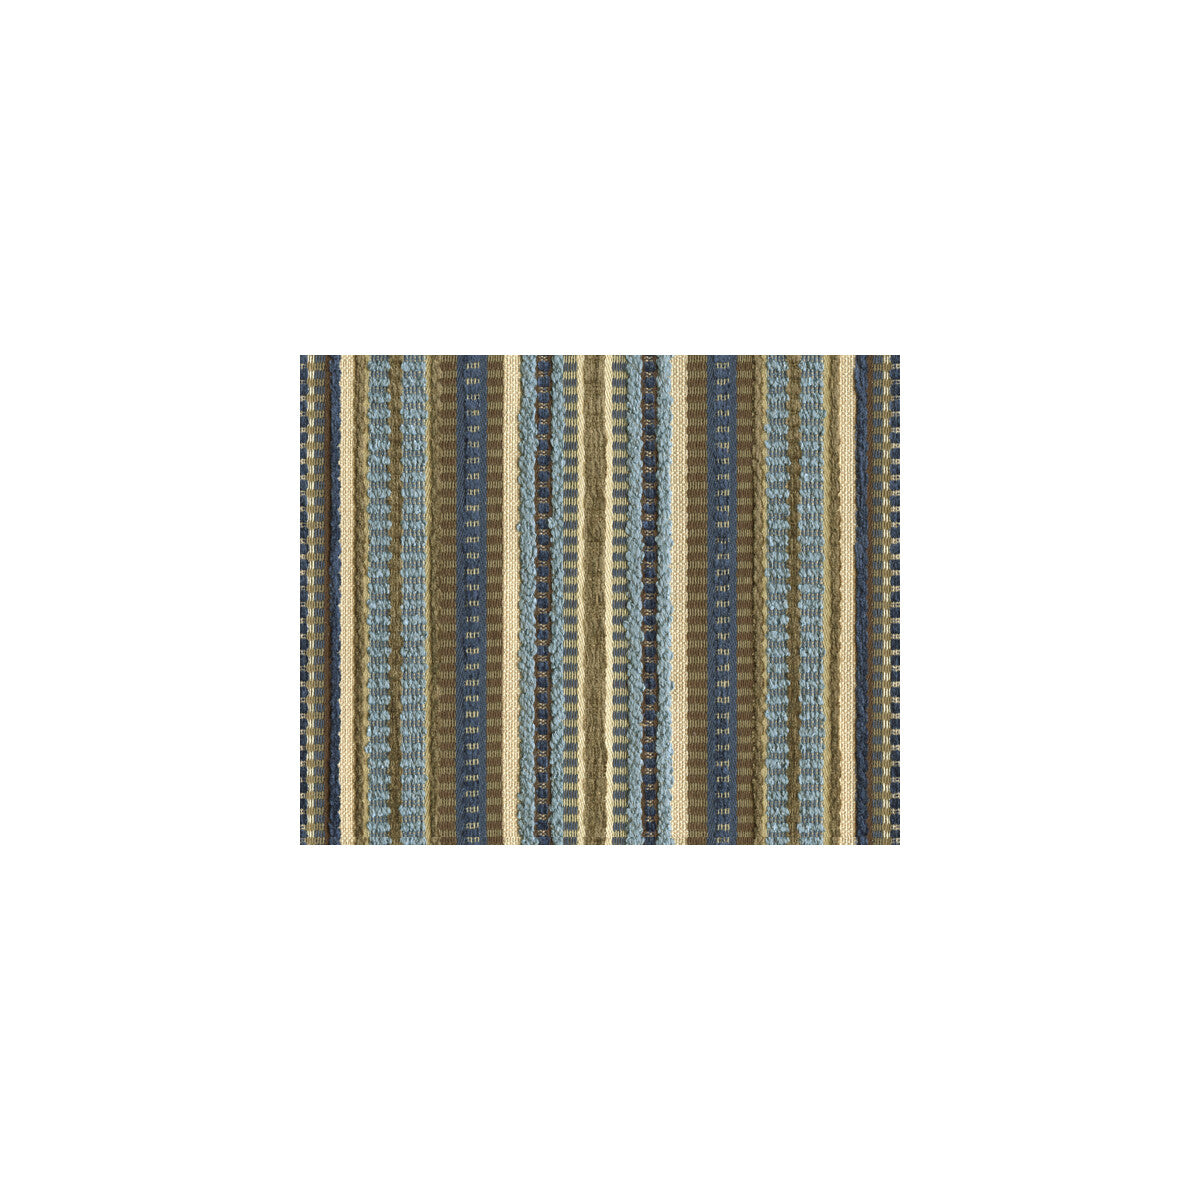 Kravet Design fabric in 31429-615 color - pattern 31429.615.0 - by Kravet Design in the Gis collection